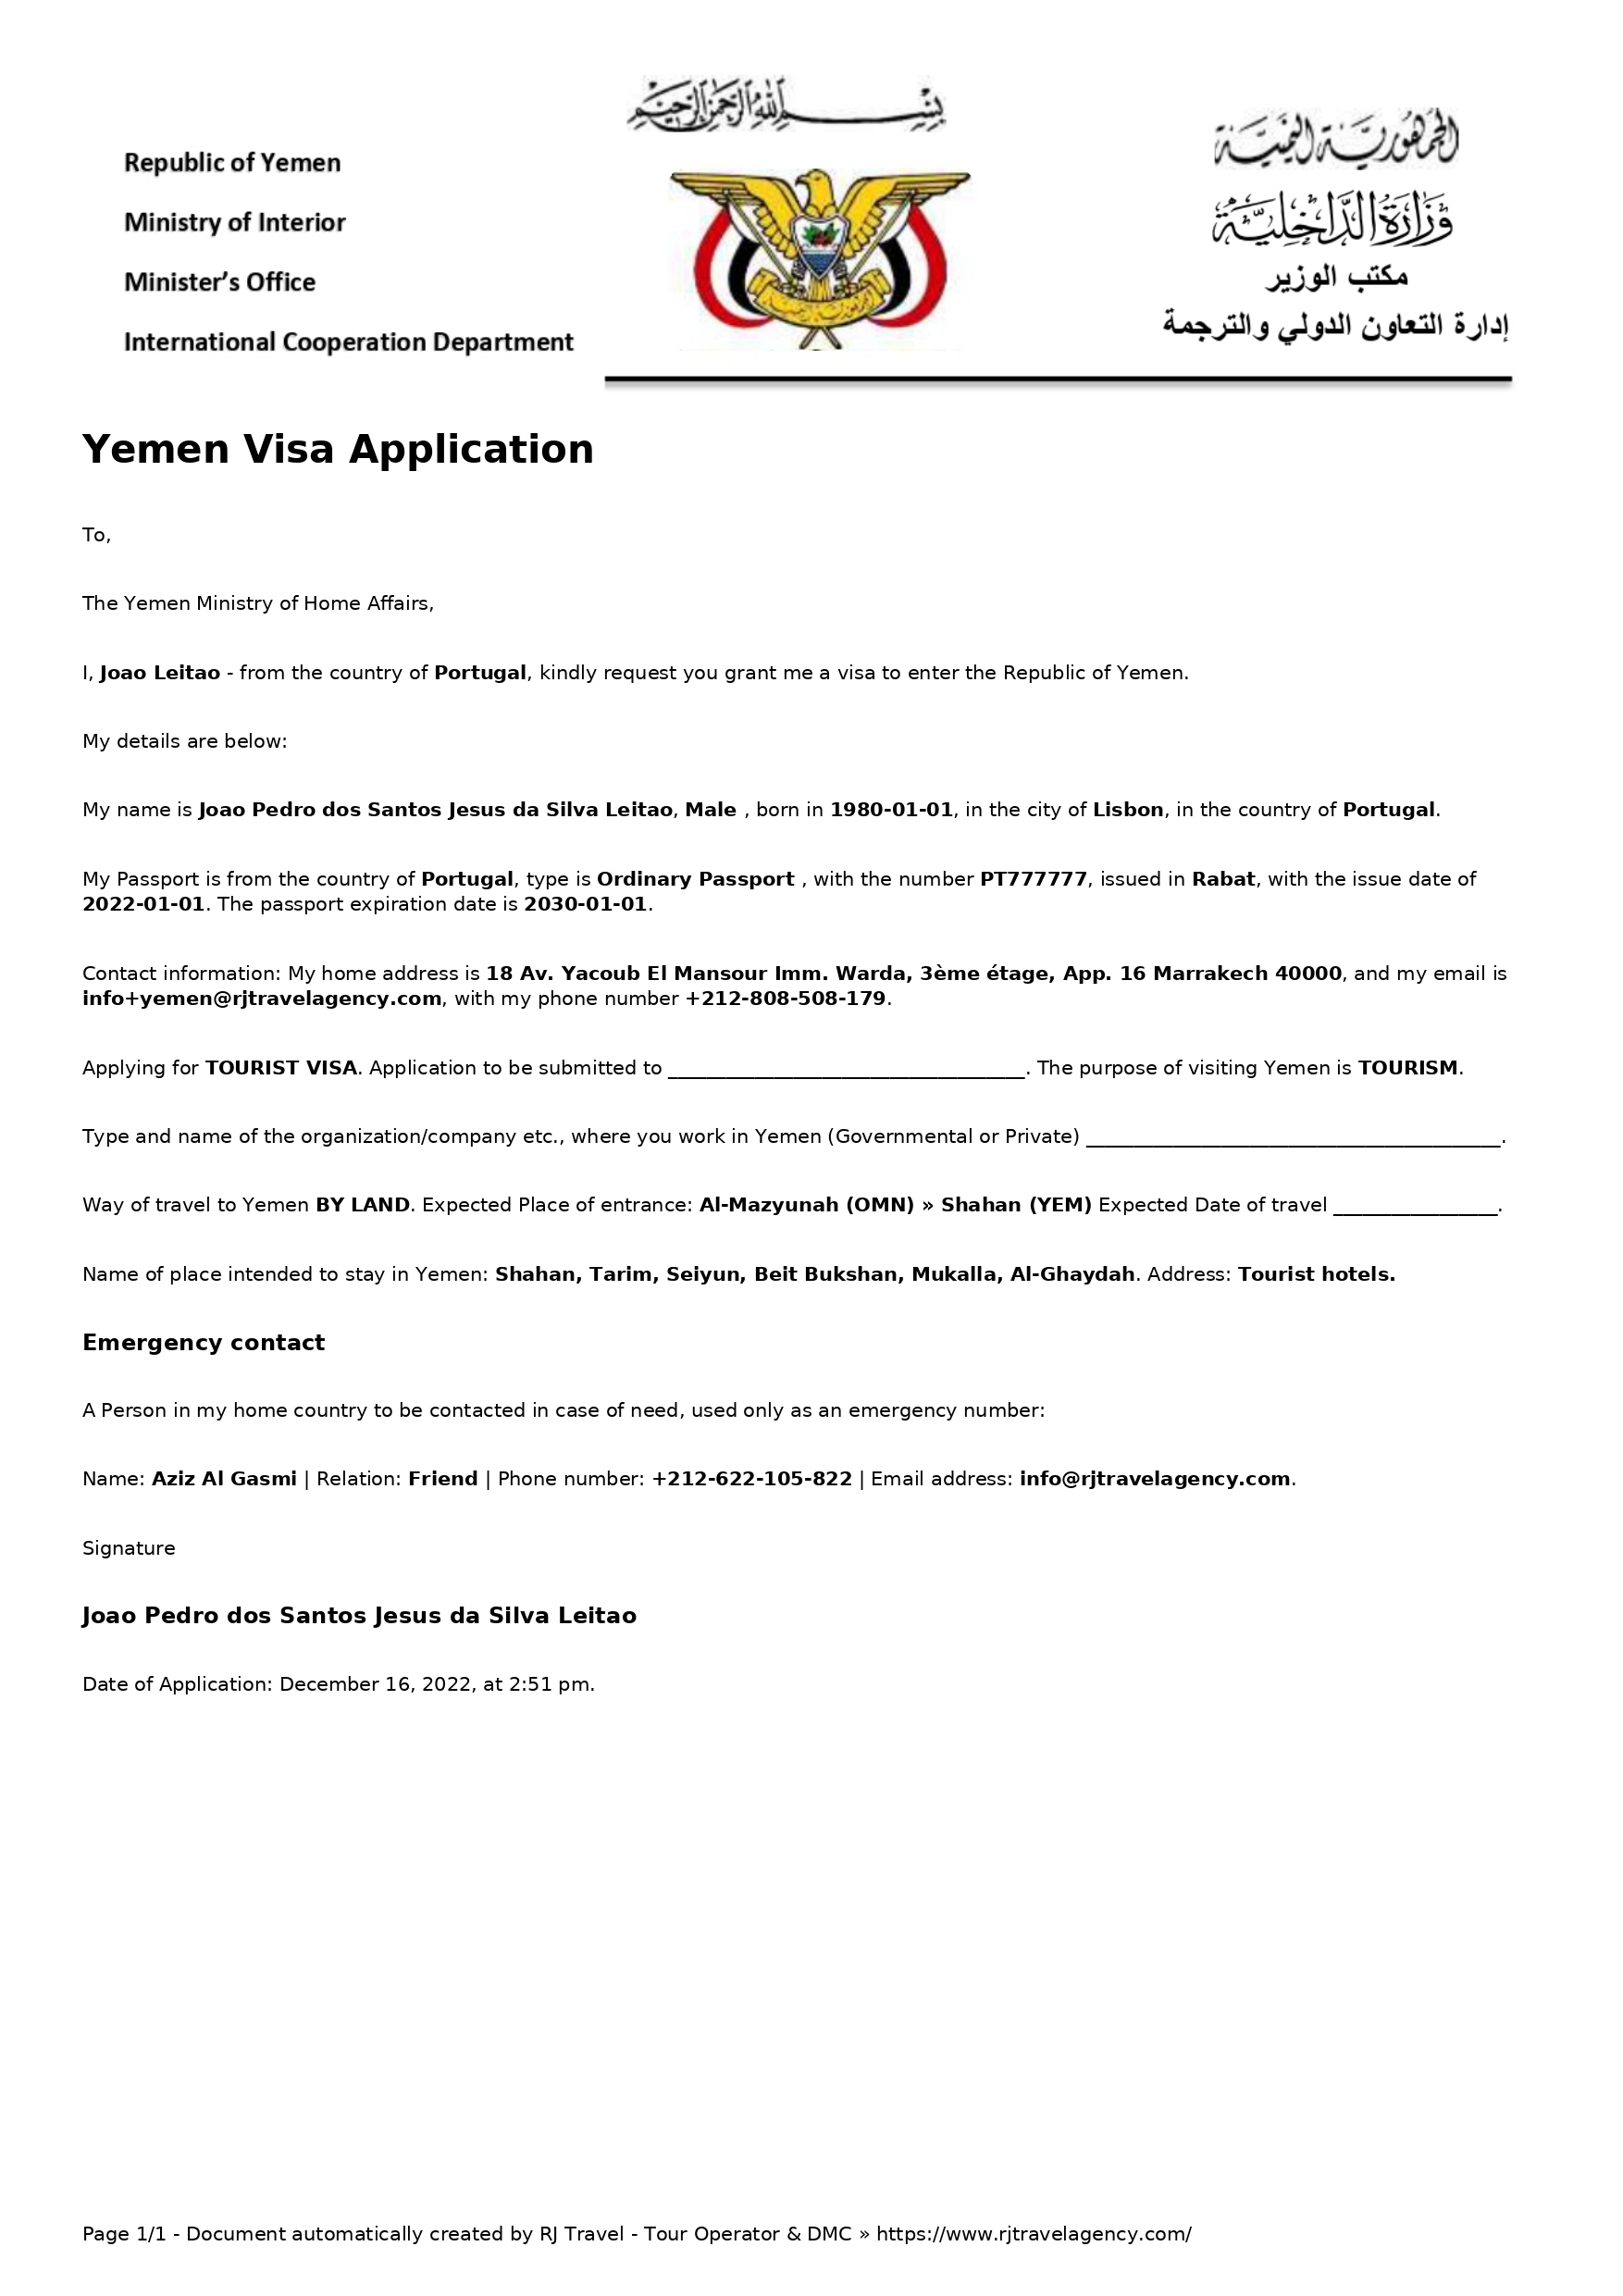 Visa Application Form Yemen